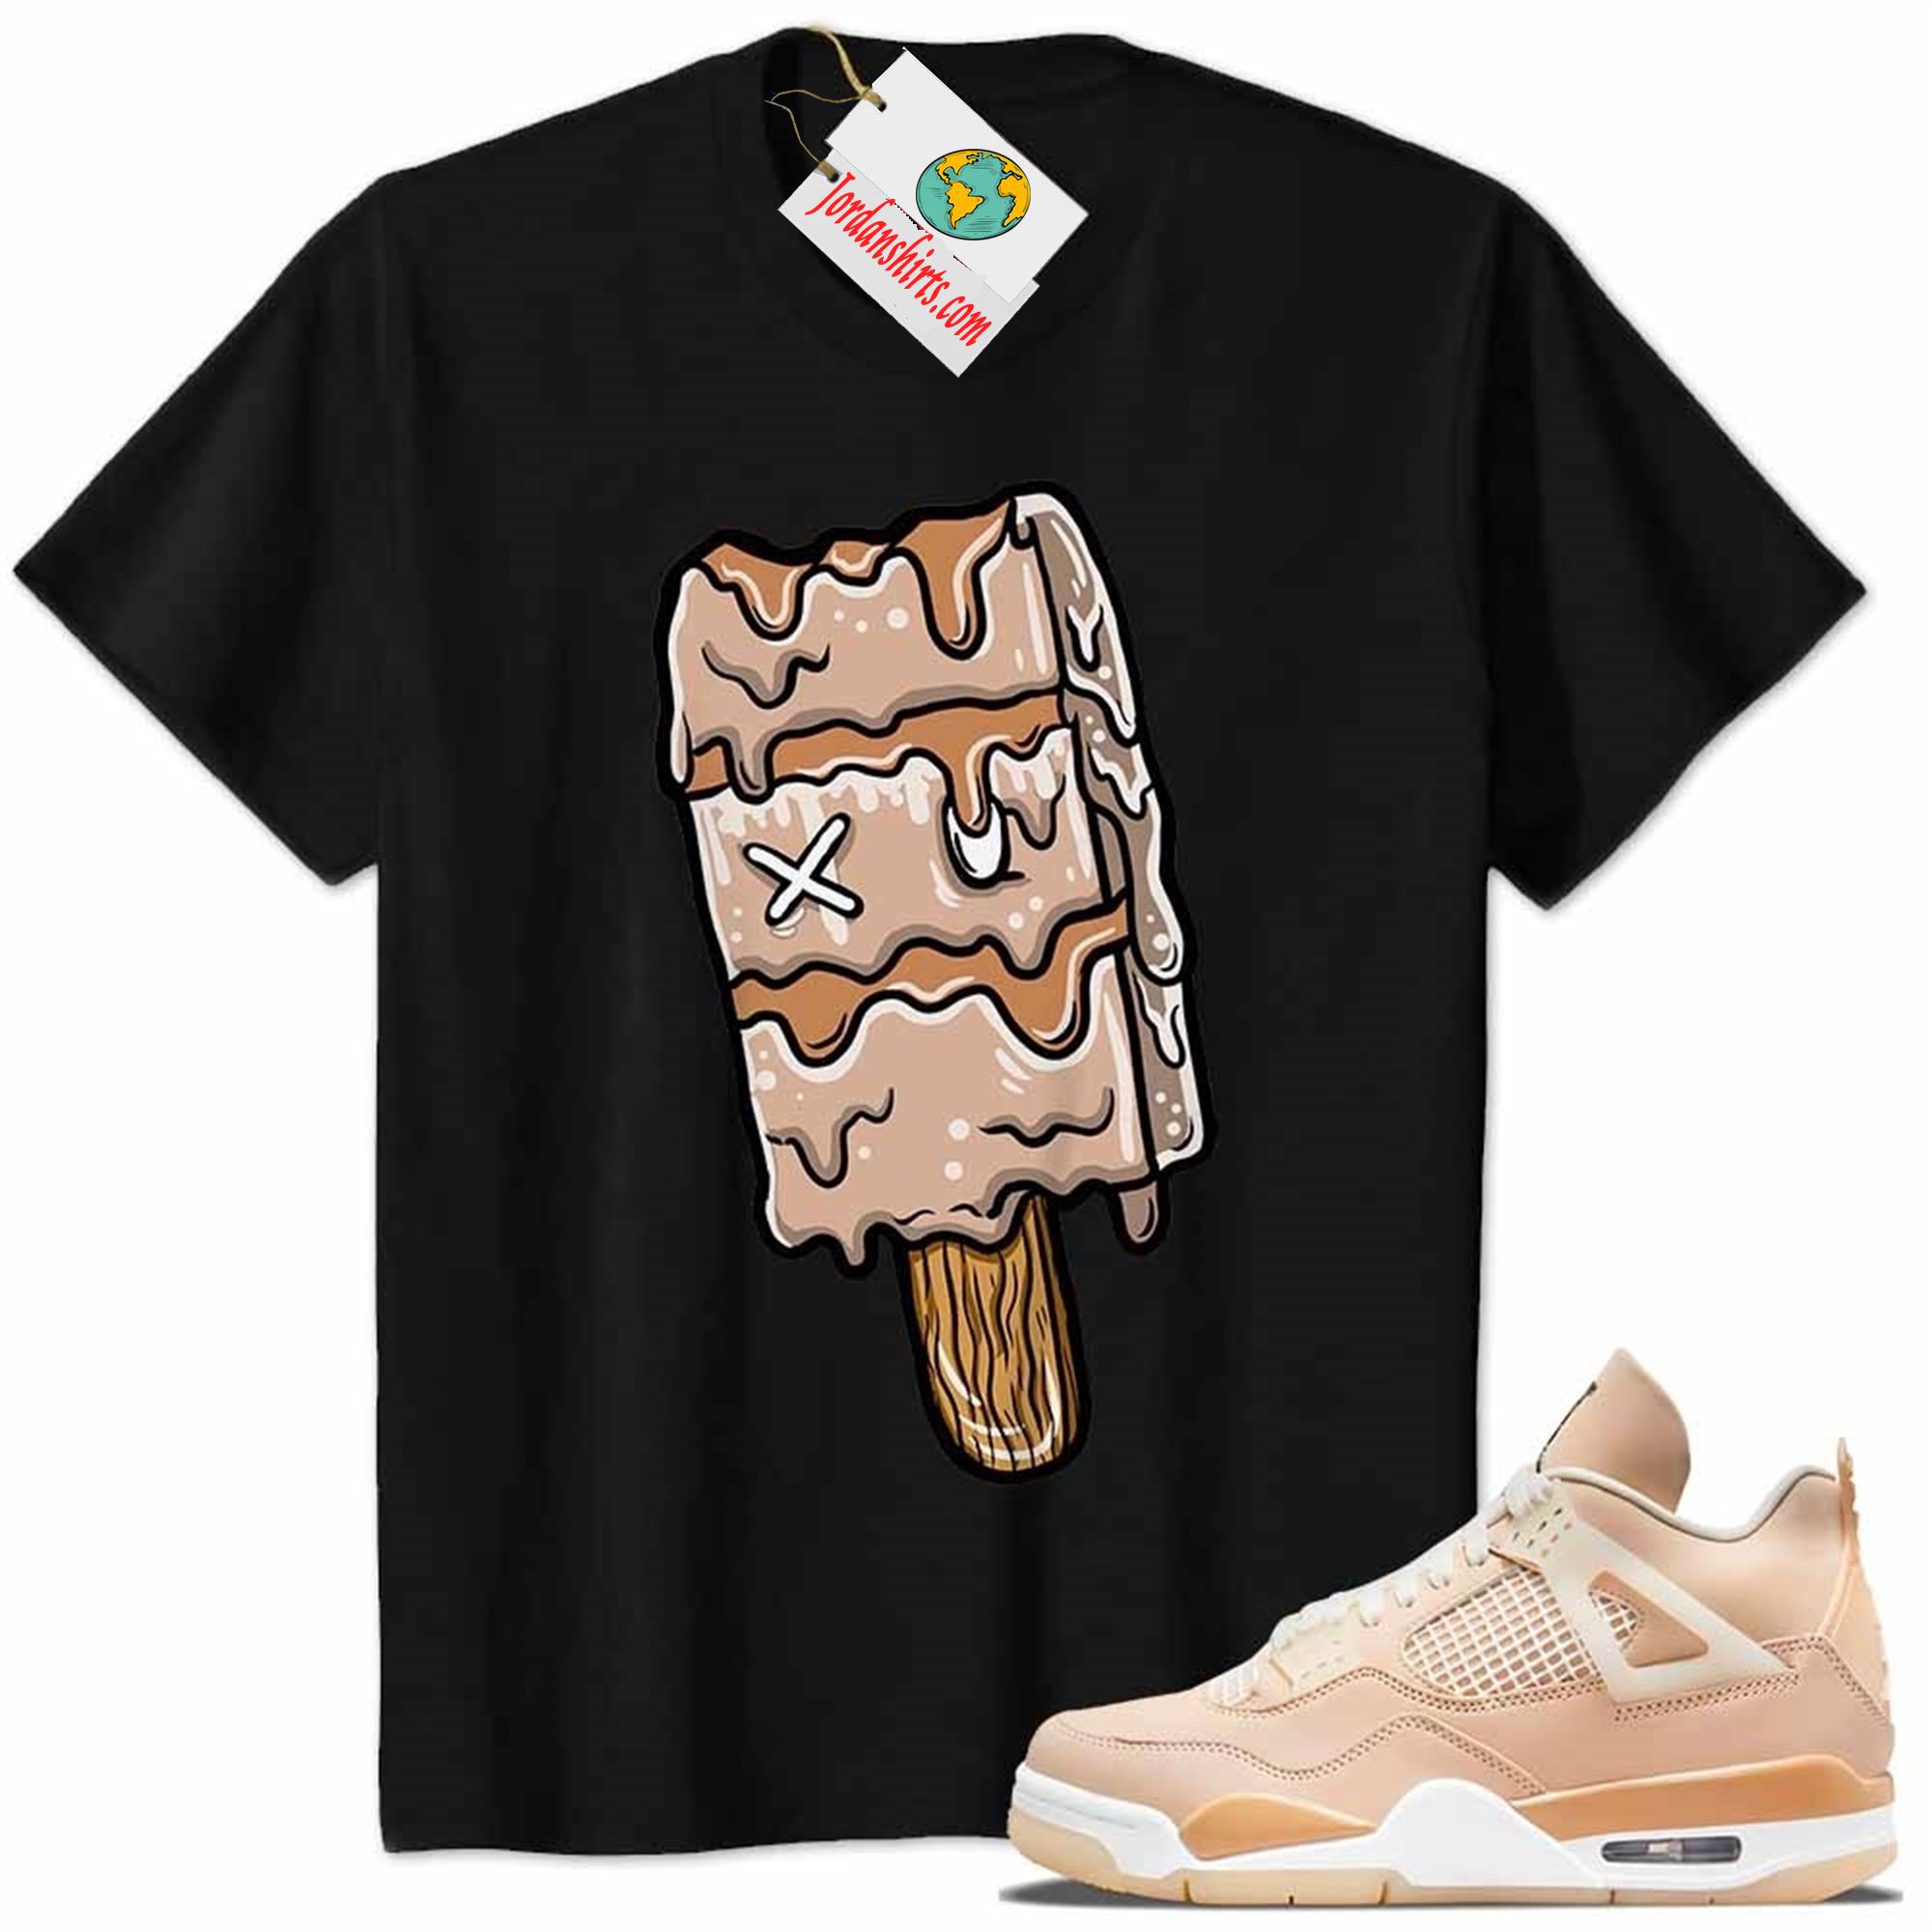 Jordan 4 Shirt, Ice Cream Dripping Black Air Jordan 4 Shimmer 4s Size Up To 5xl